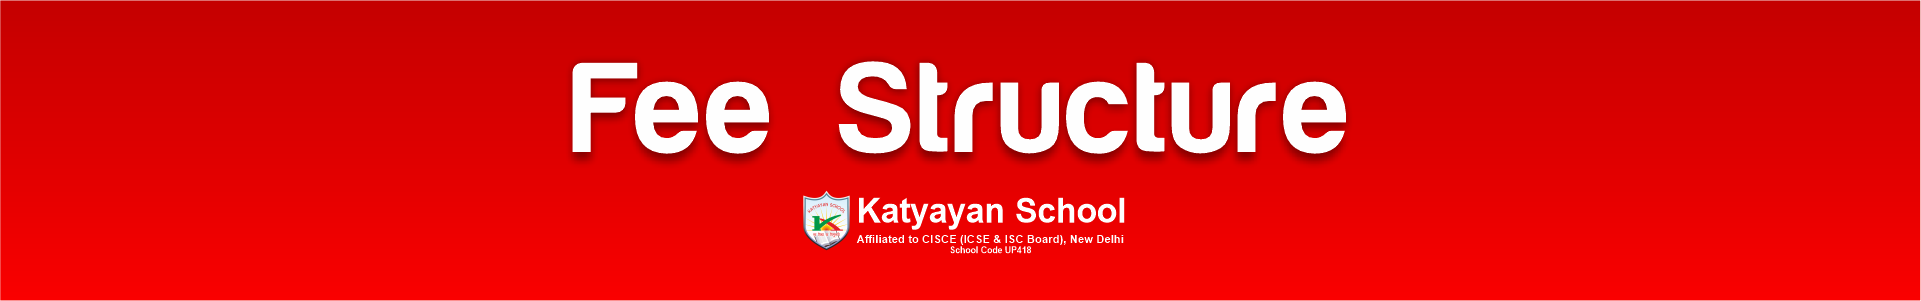 Katyayan School Fee Structure